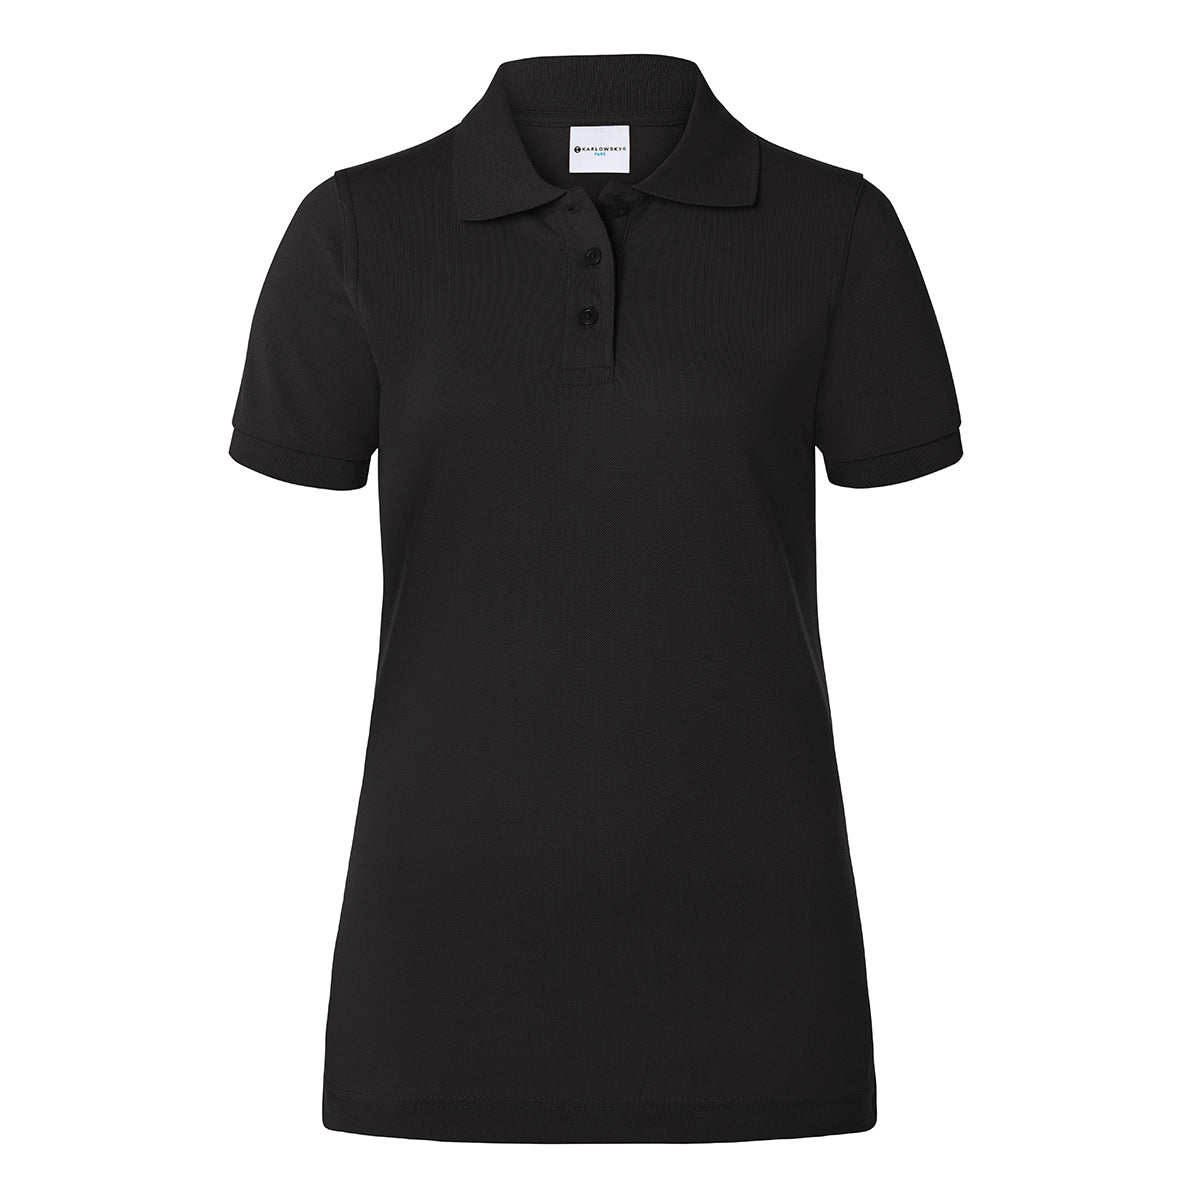 (6 stk) Karlowsky - Workwear Polo Shirt Basic til Damer - Sort - Størrelse: M